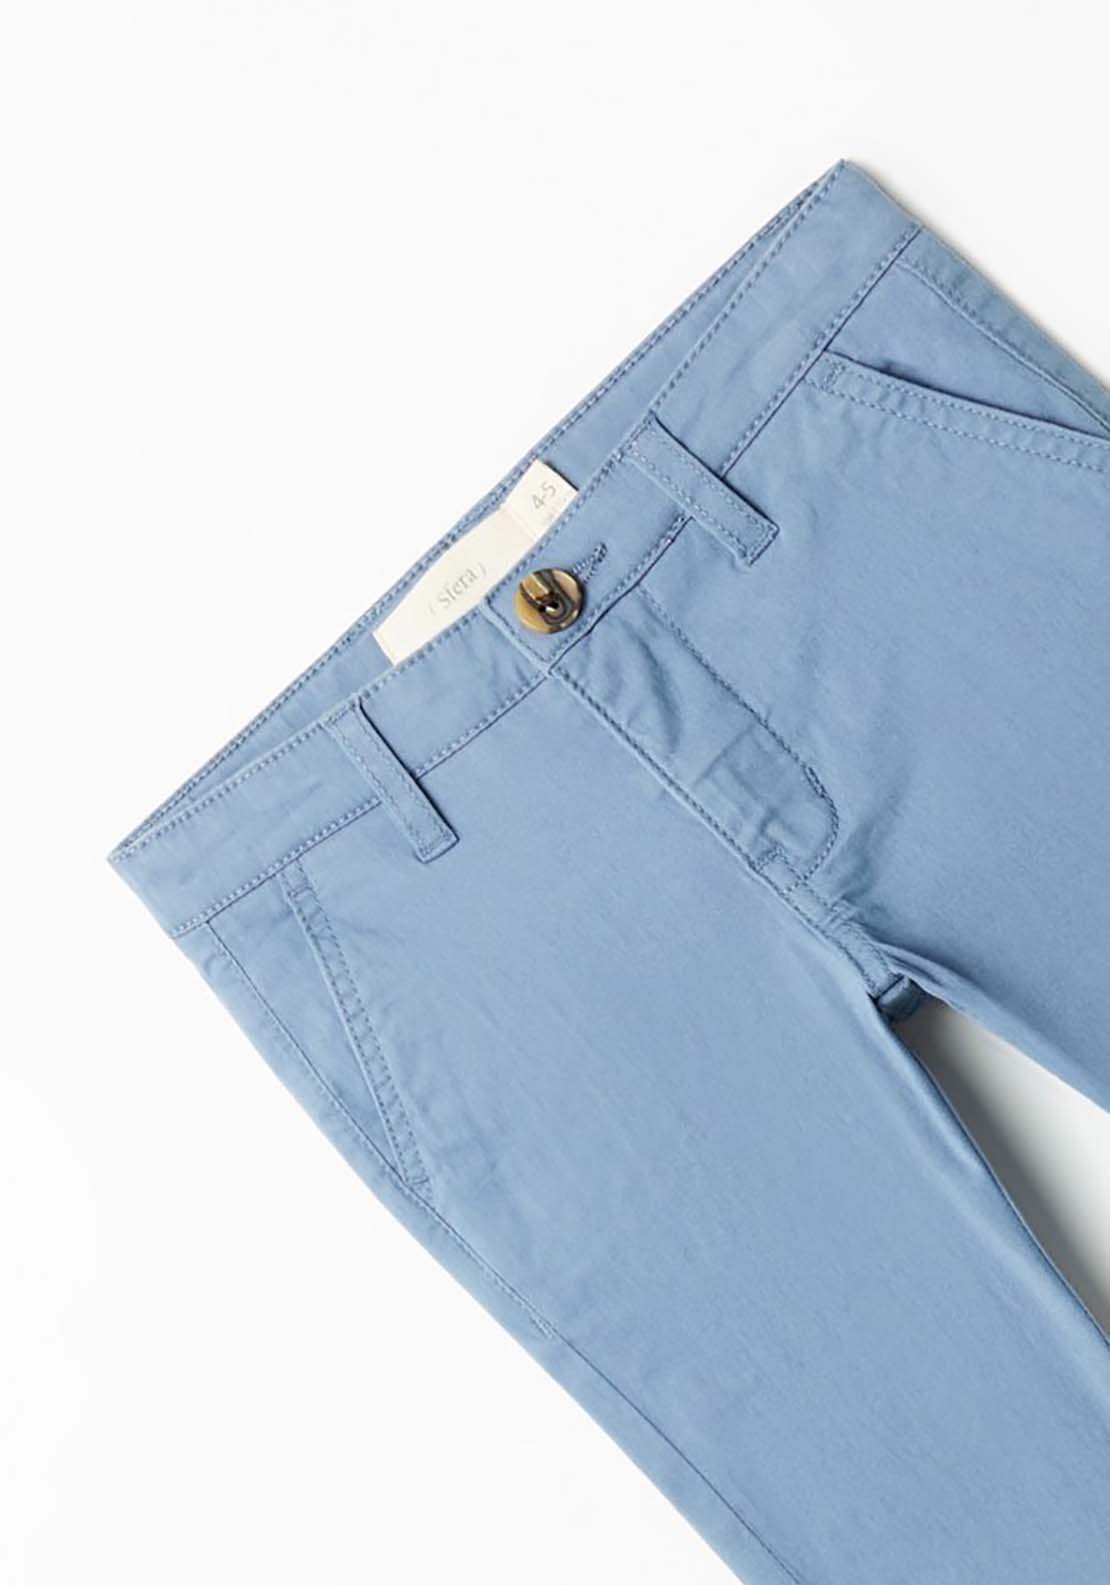 Sfera Formal Plain Trousers - Blue 2 Shaws Department Stores